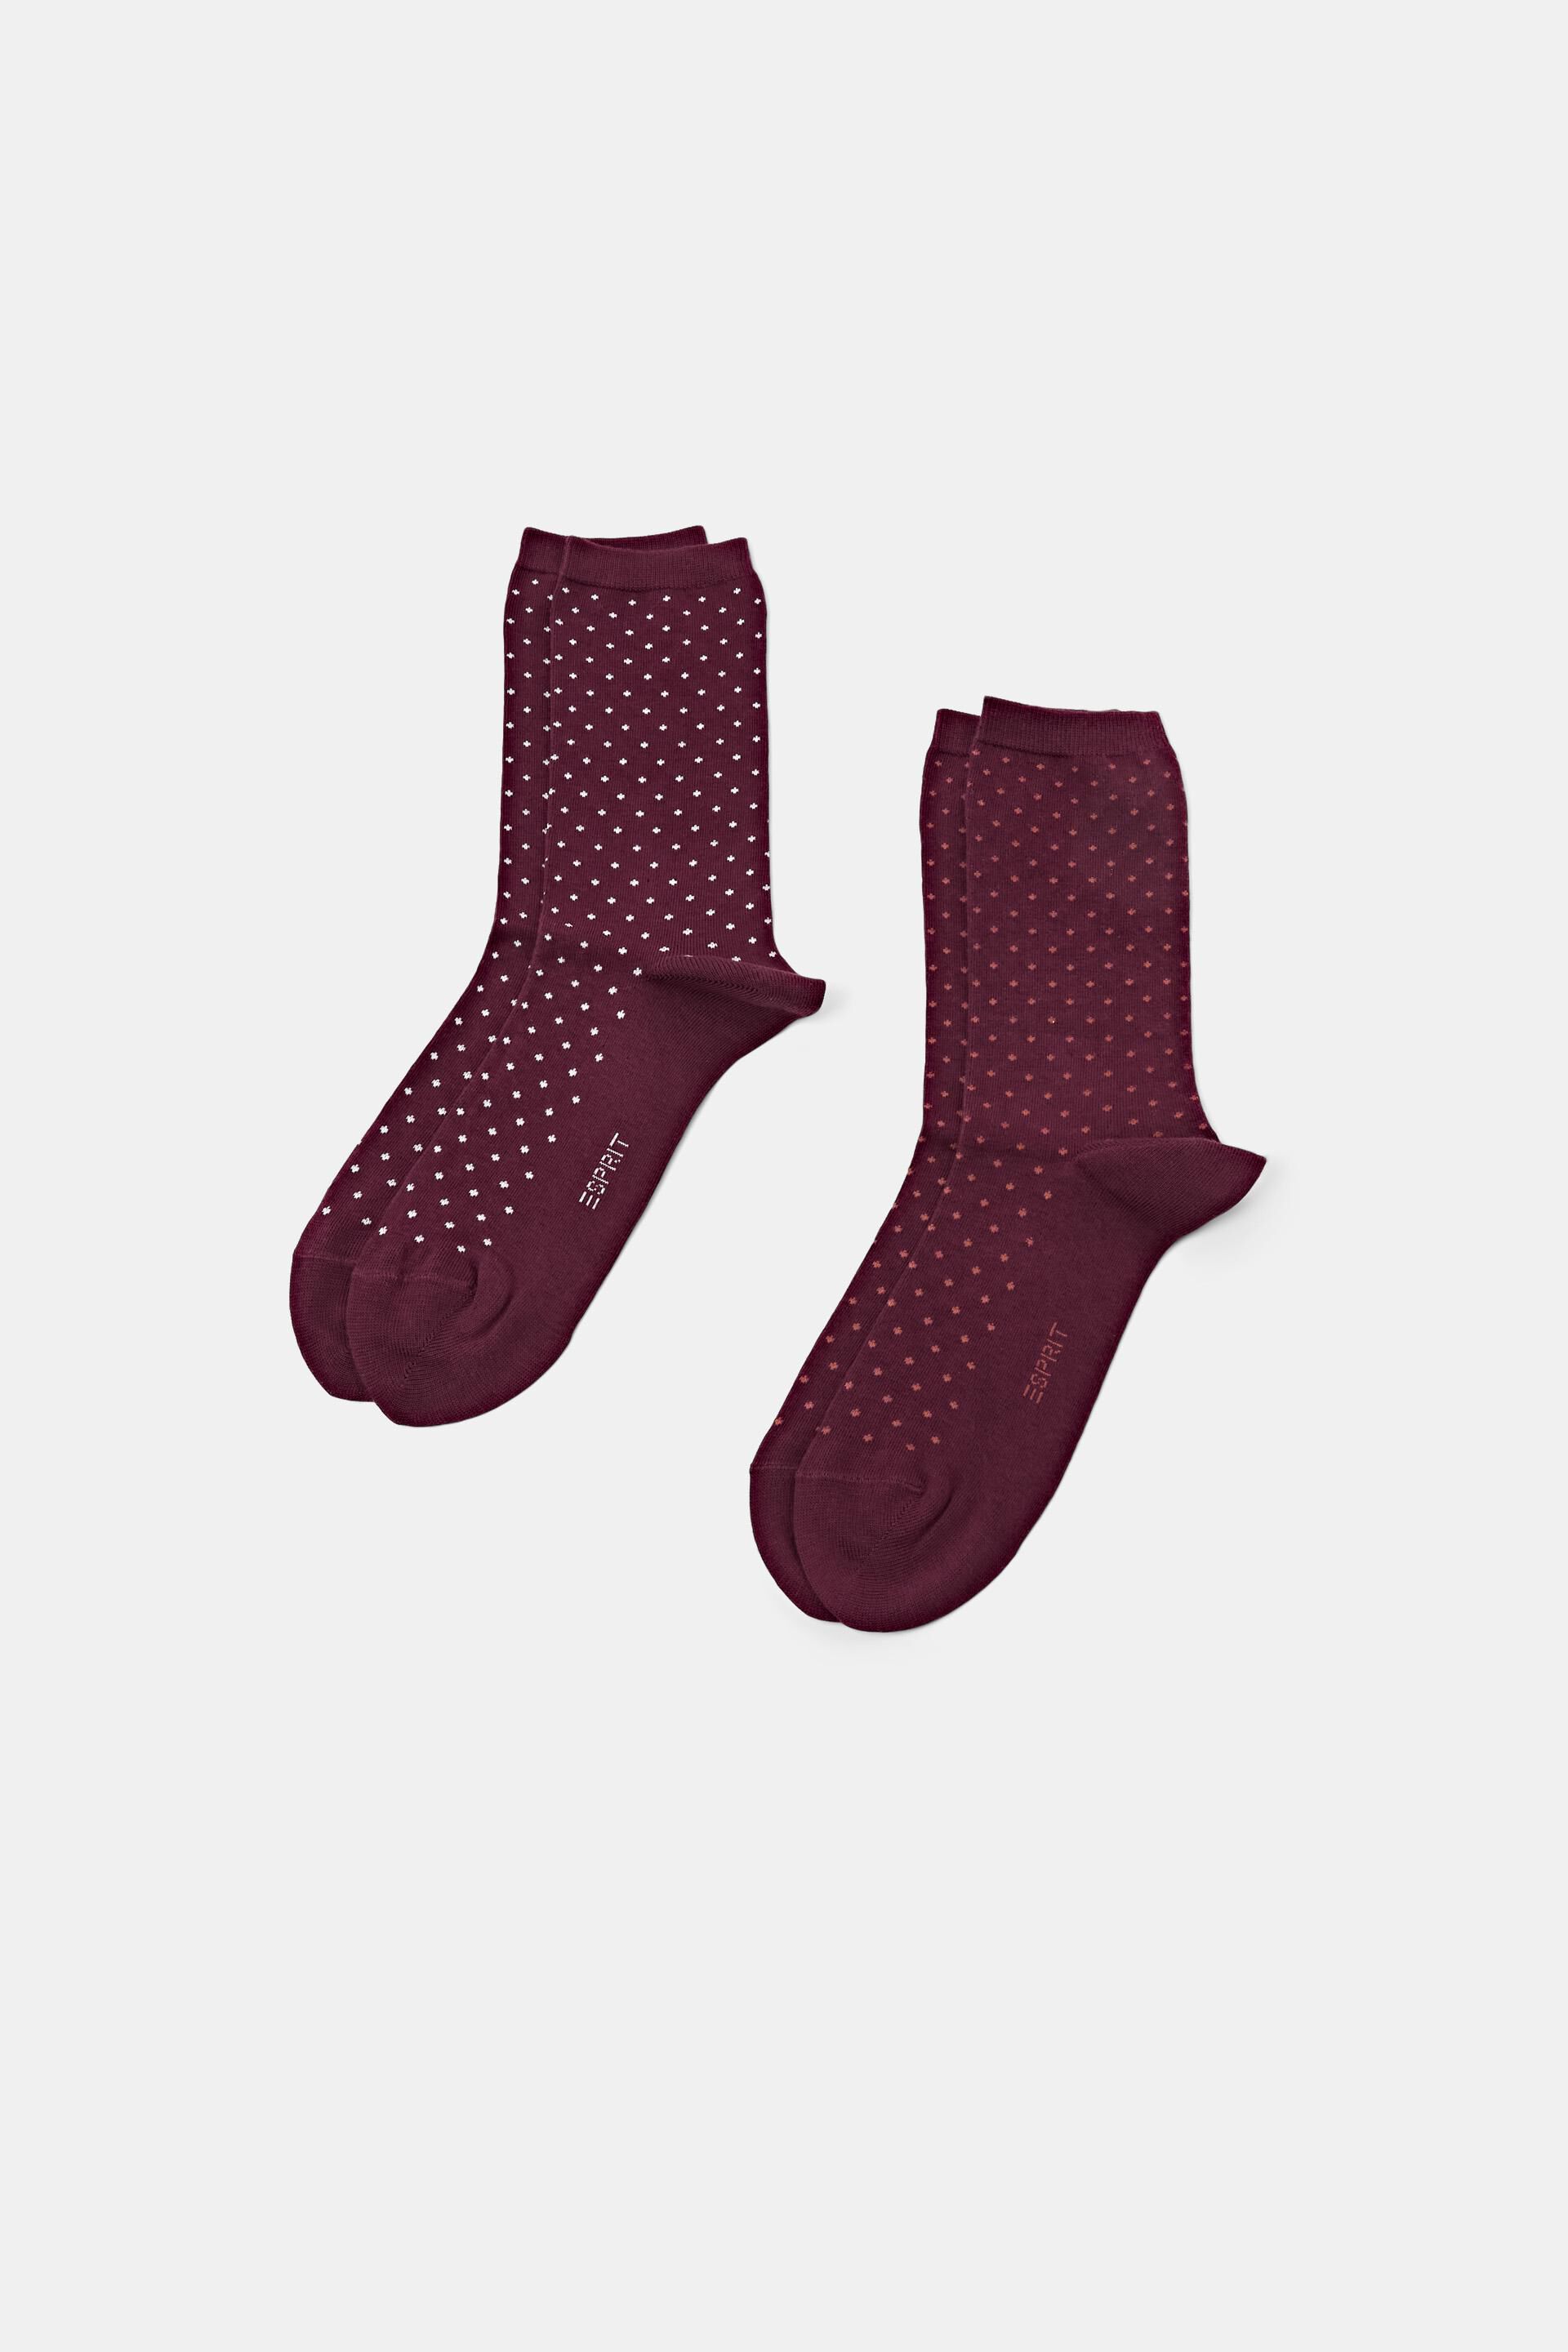 Esprit Online Store 2-pack of polka dot organic cotton socks